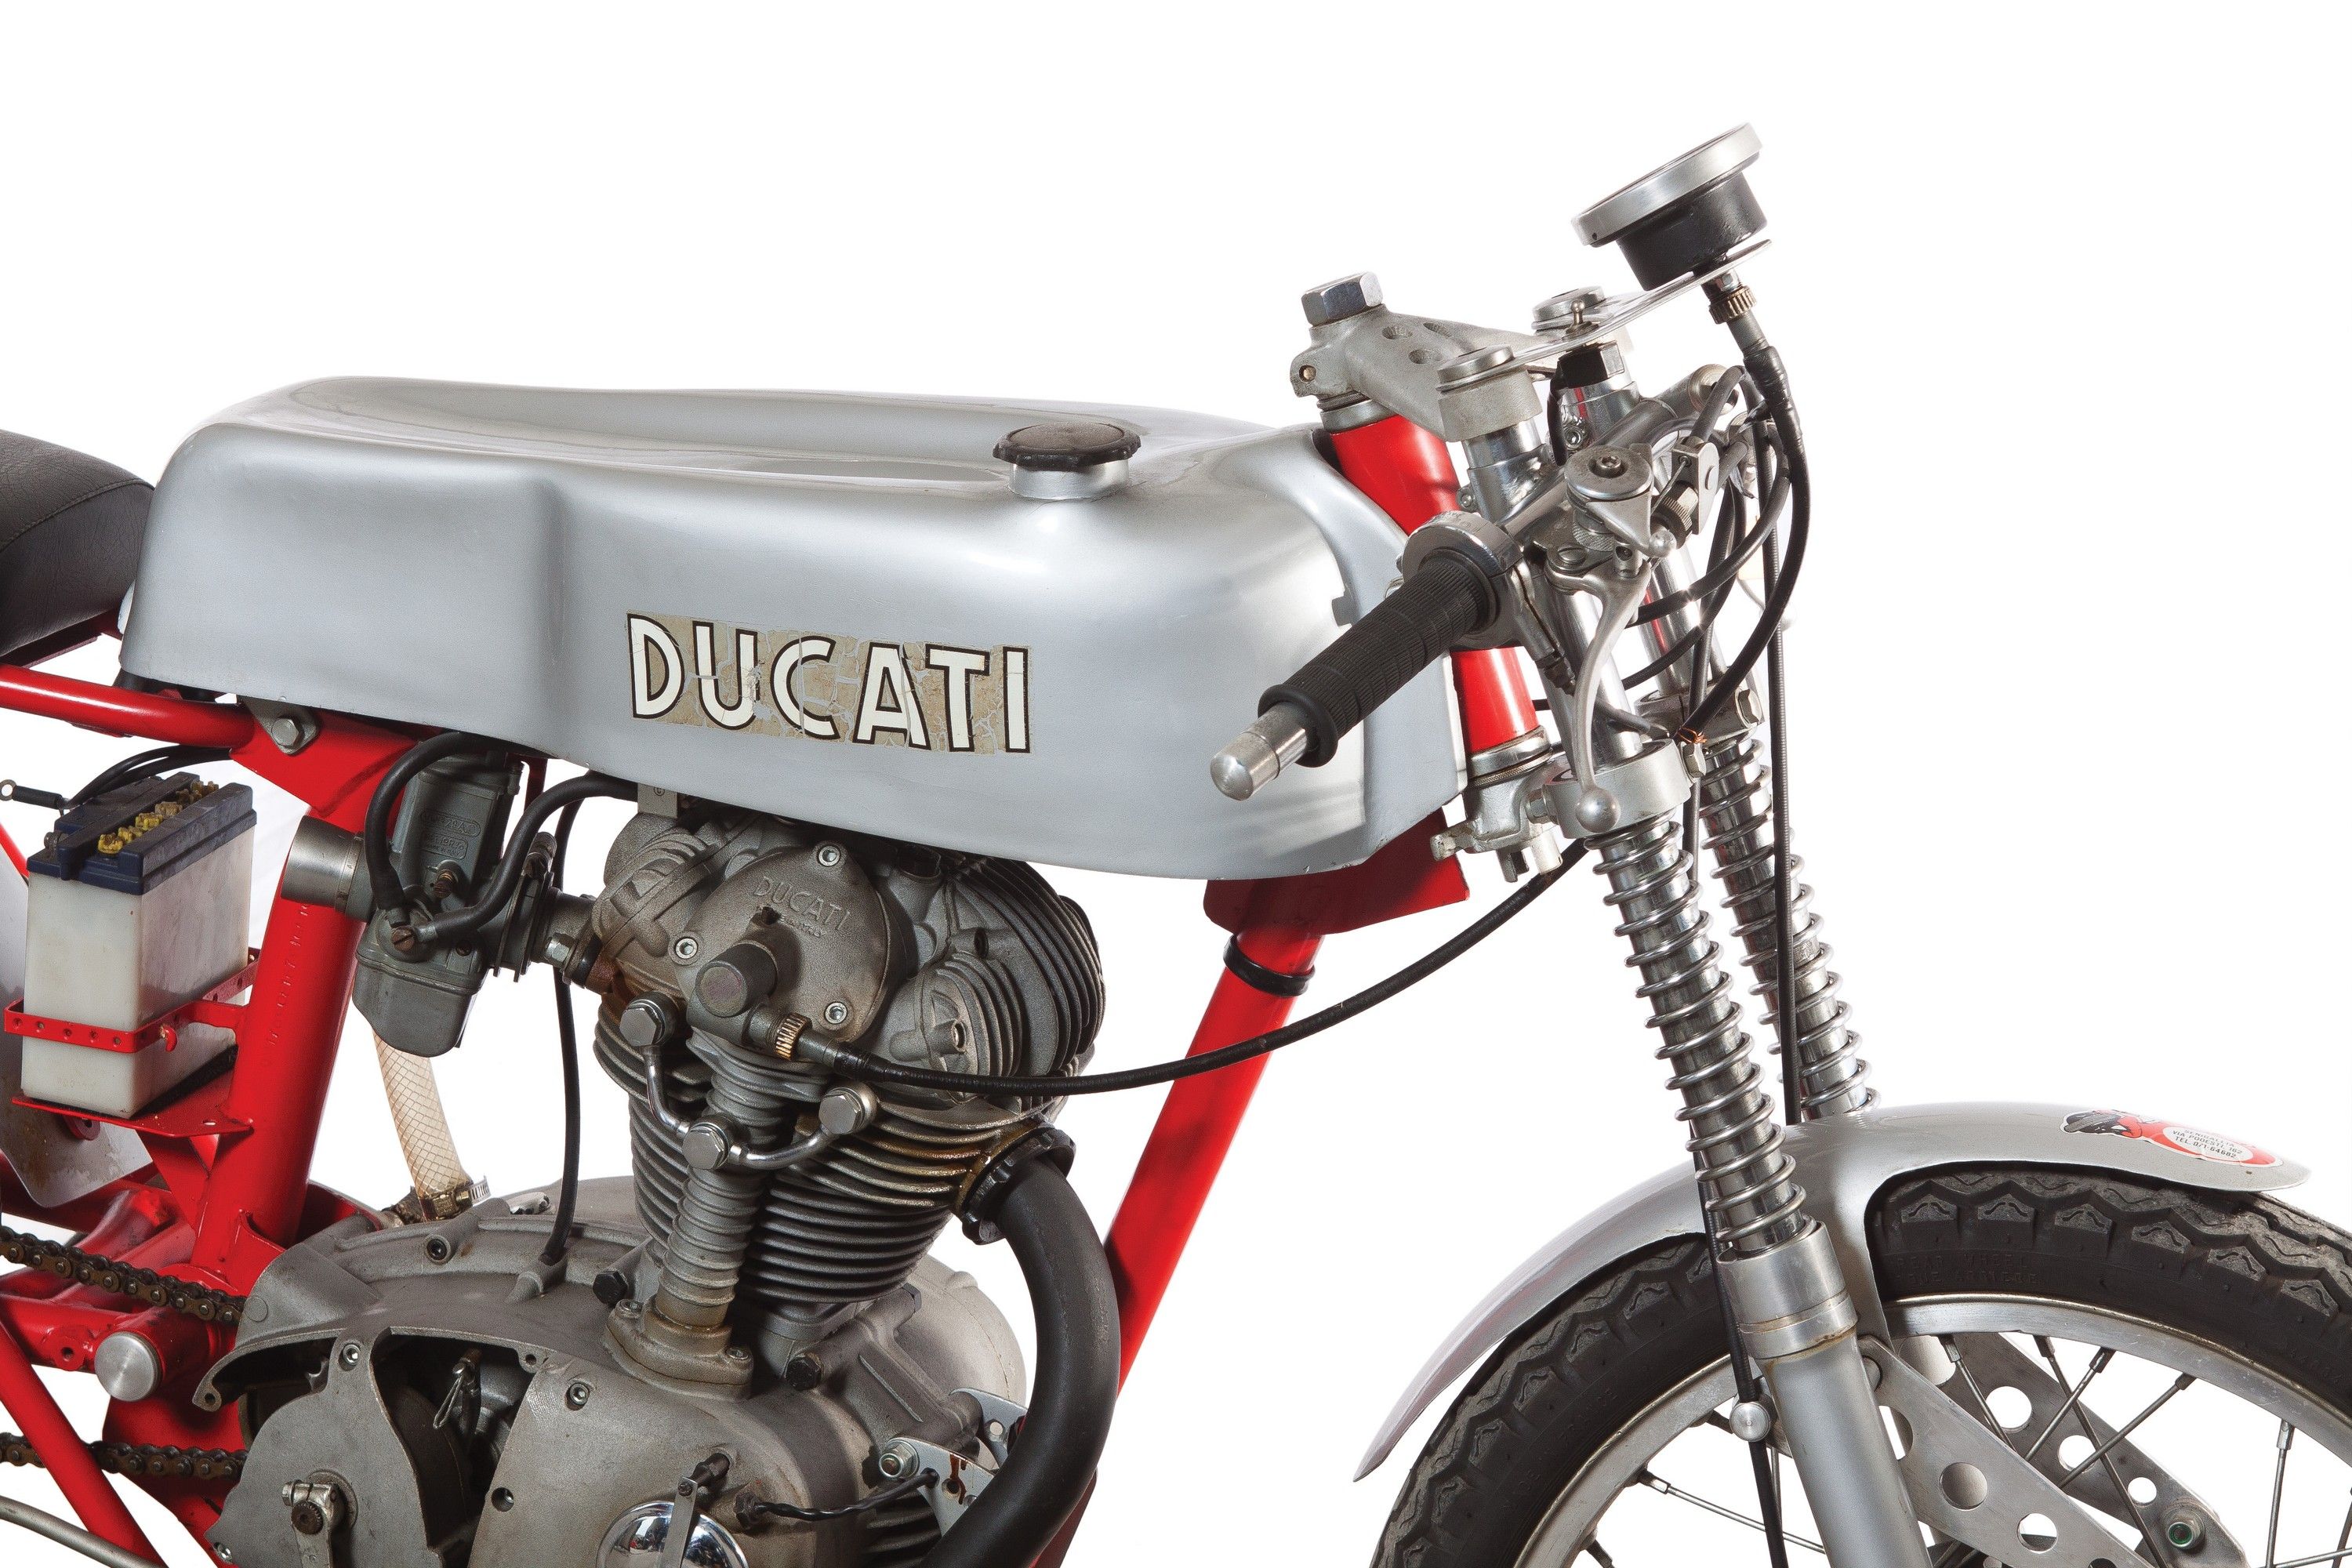 1975 Ducati 175 Sprint